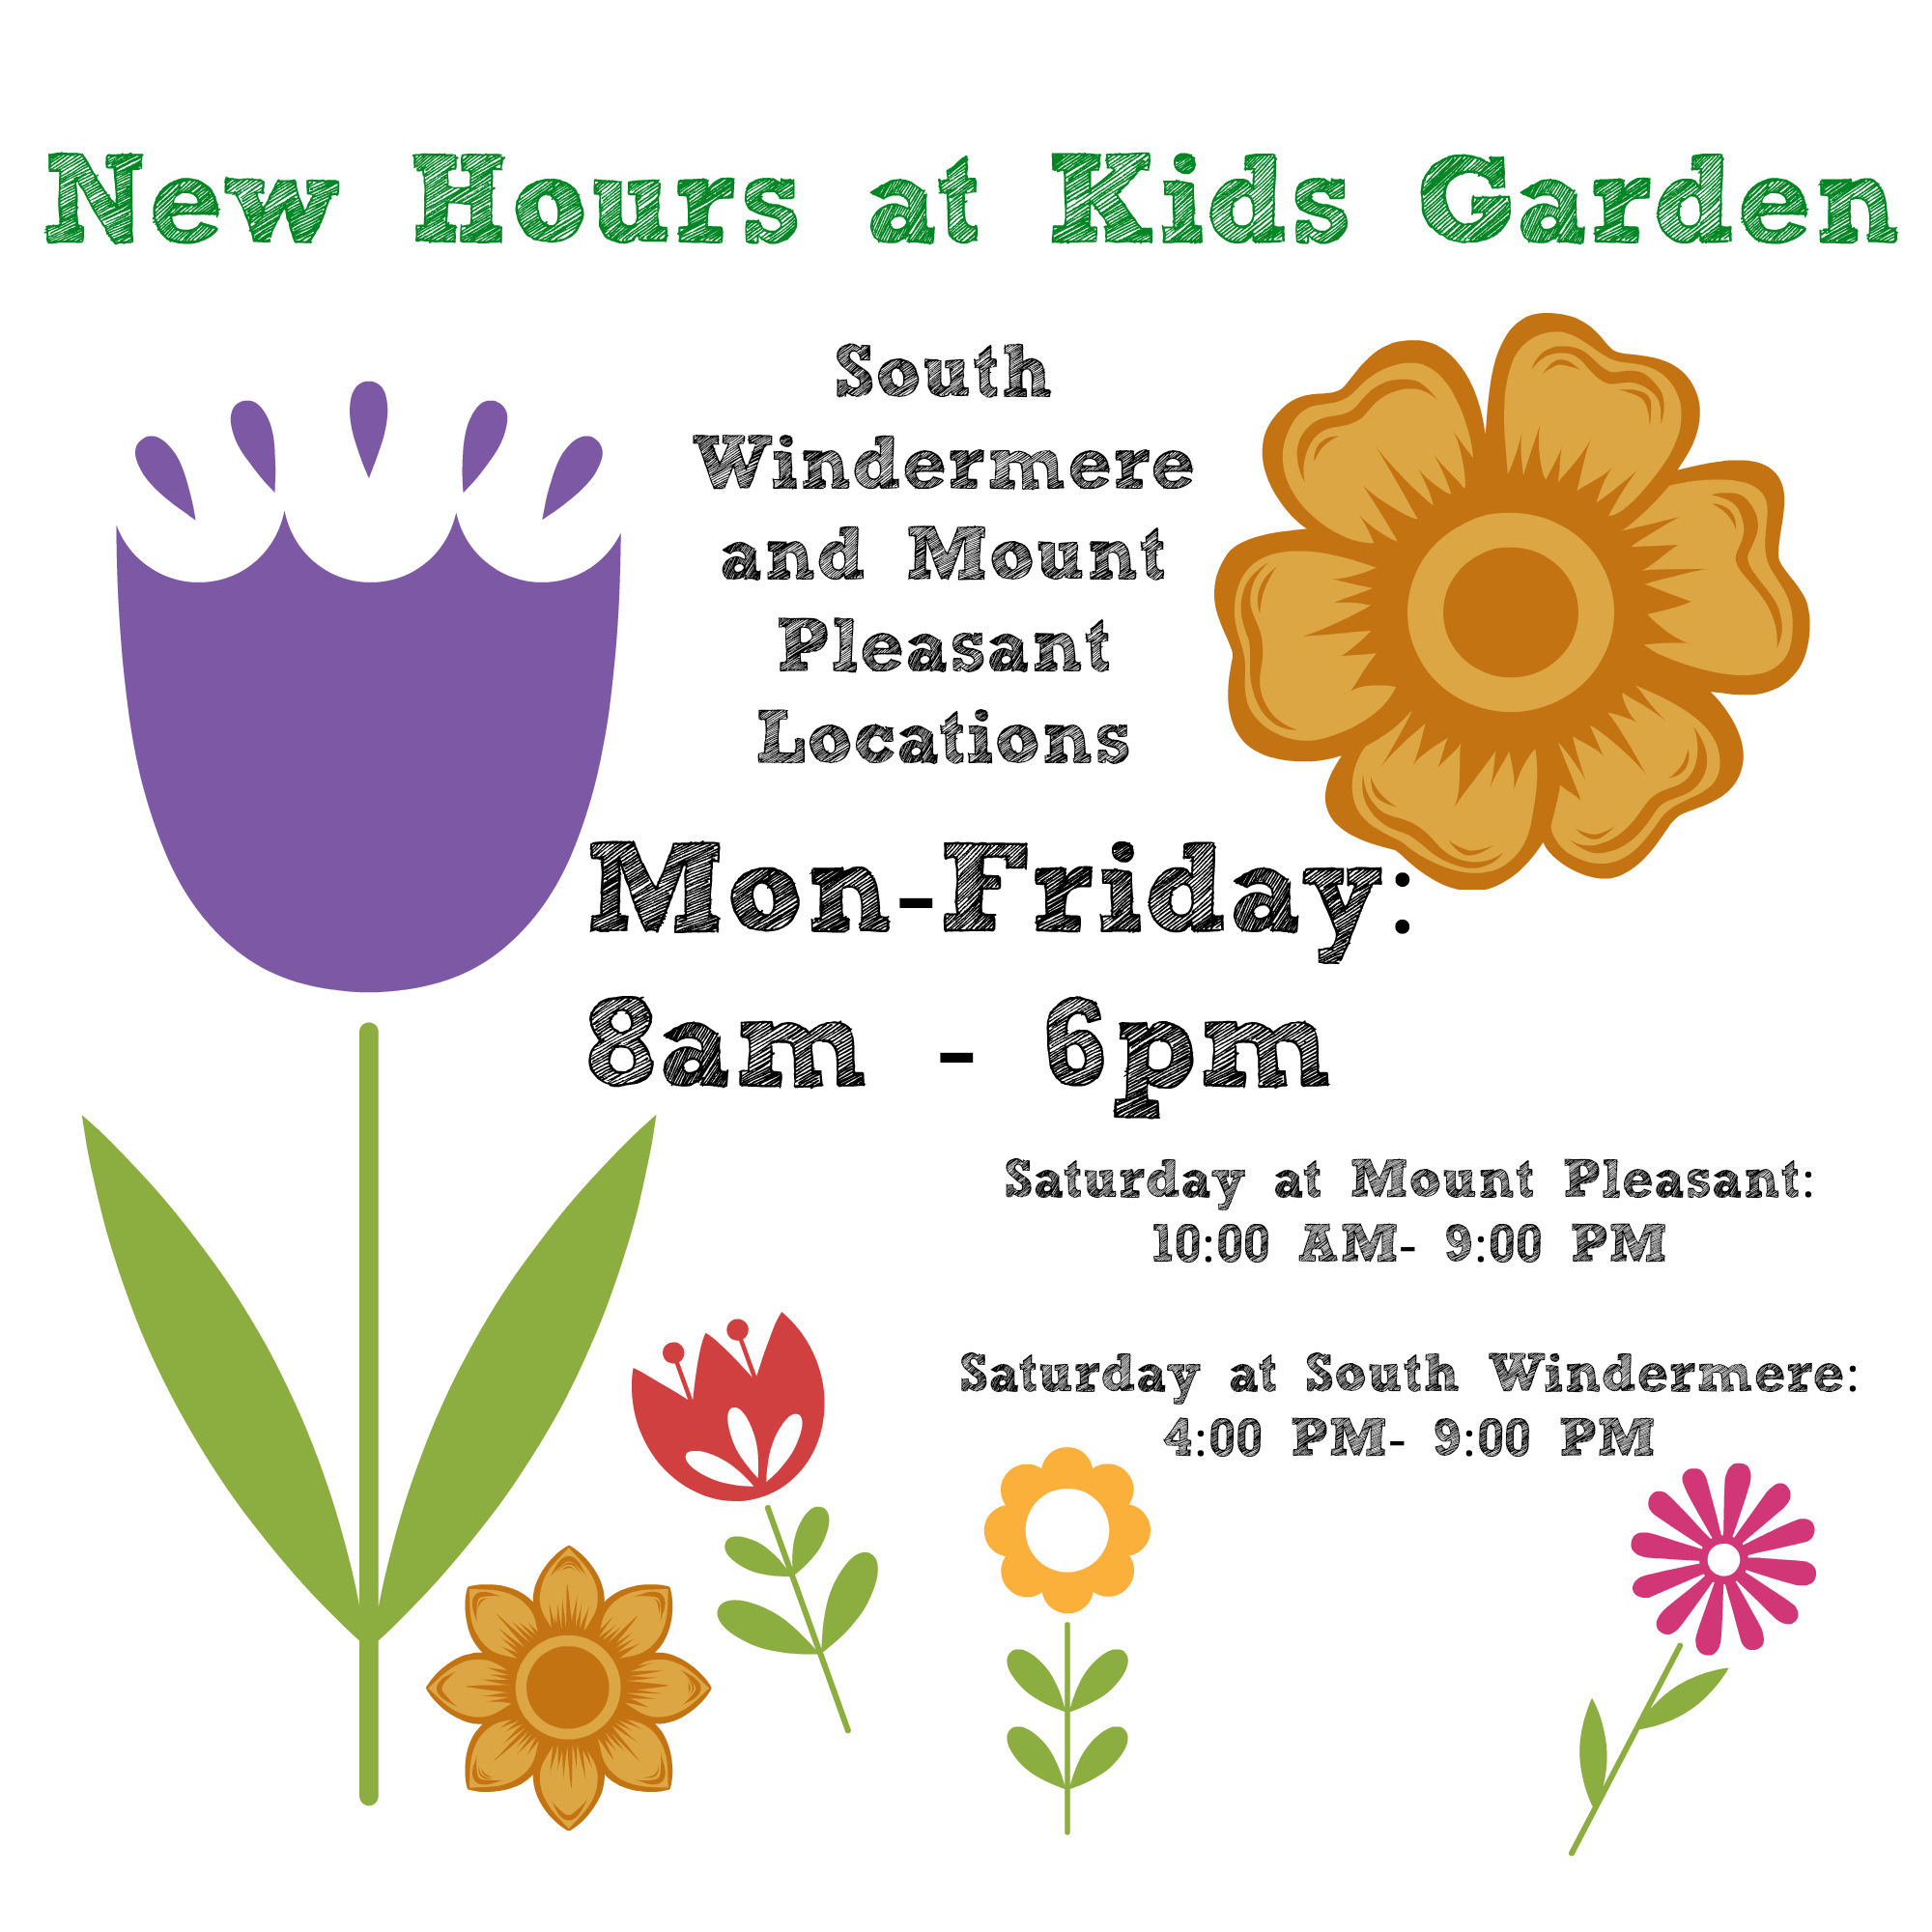 The new schedule at Kids Garden Summerville.